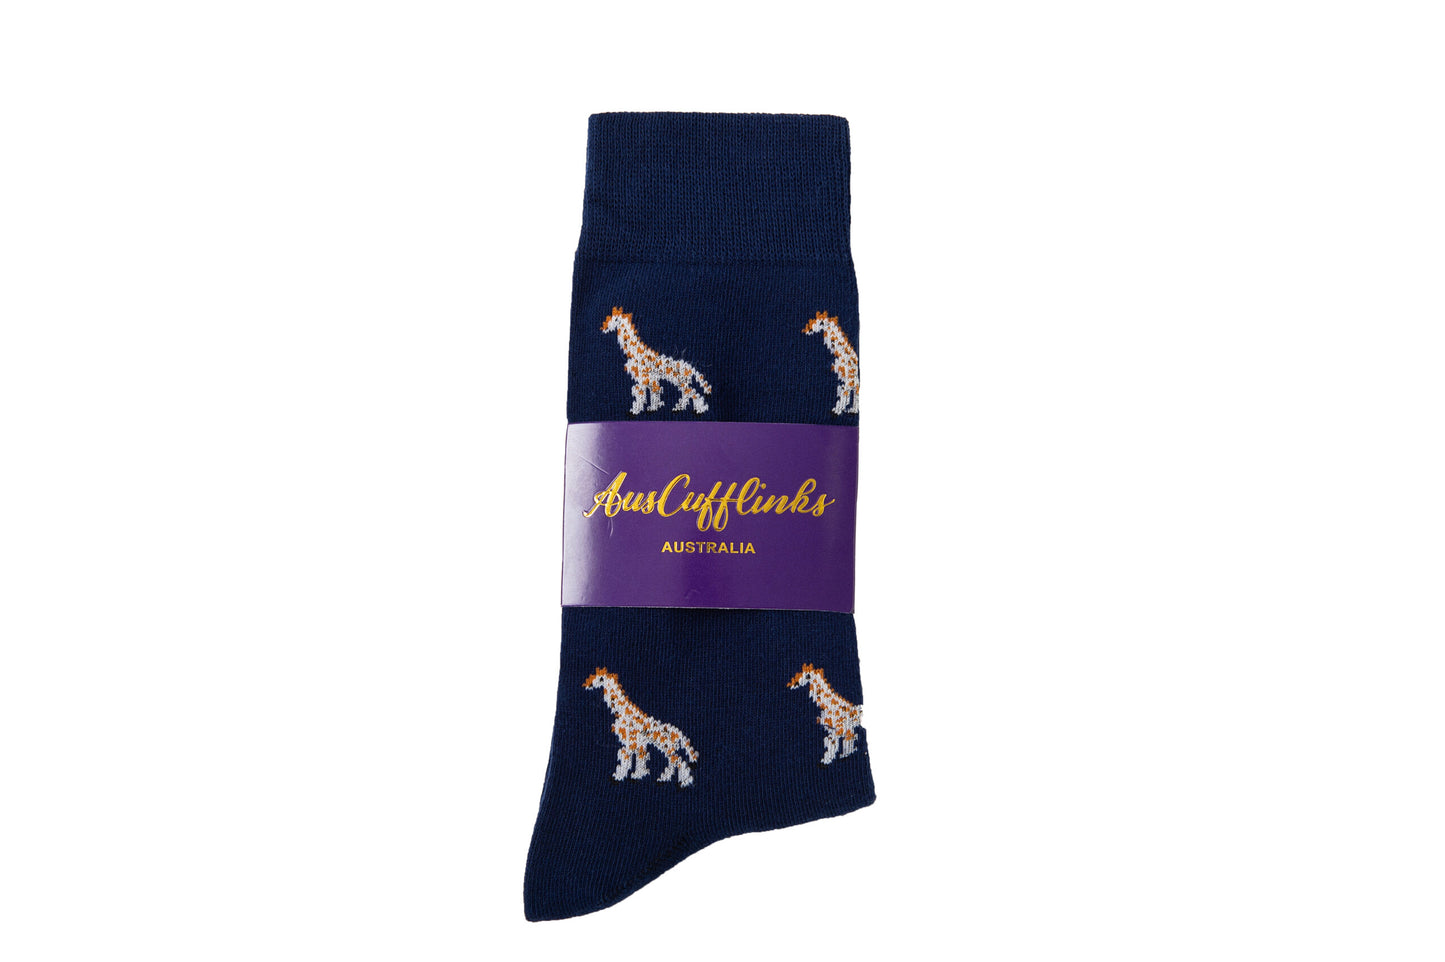 Giraffe Socks